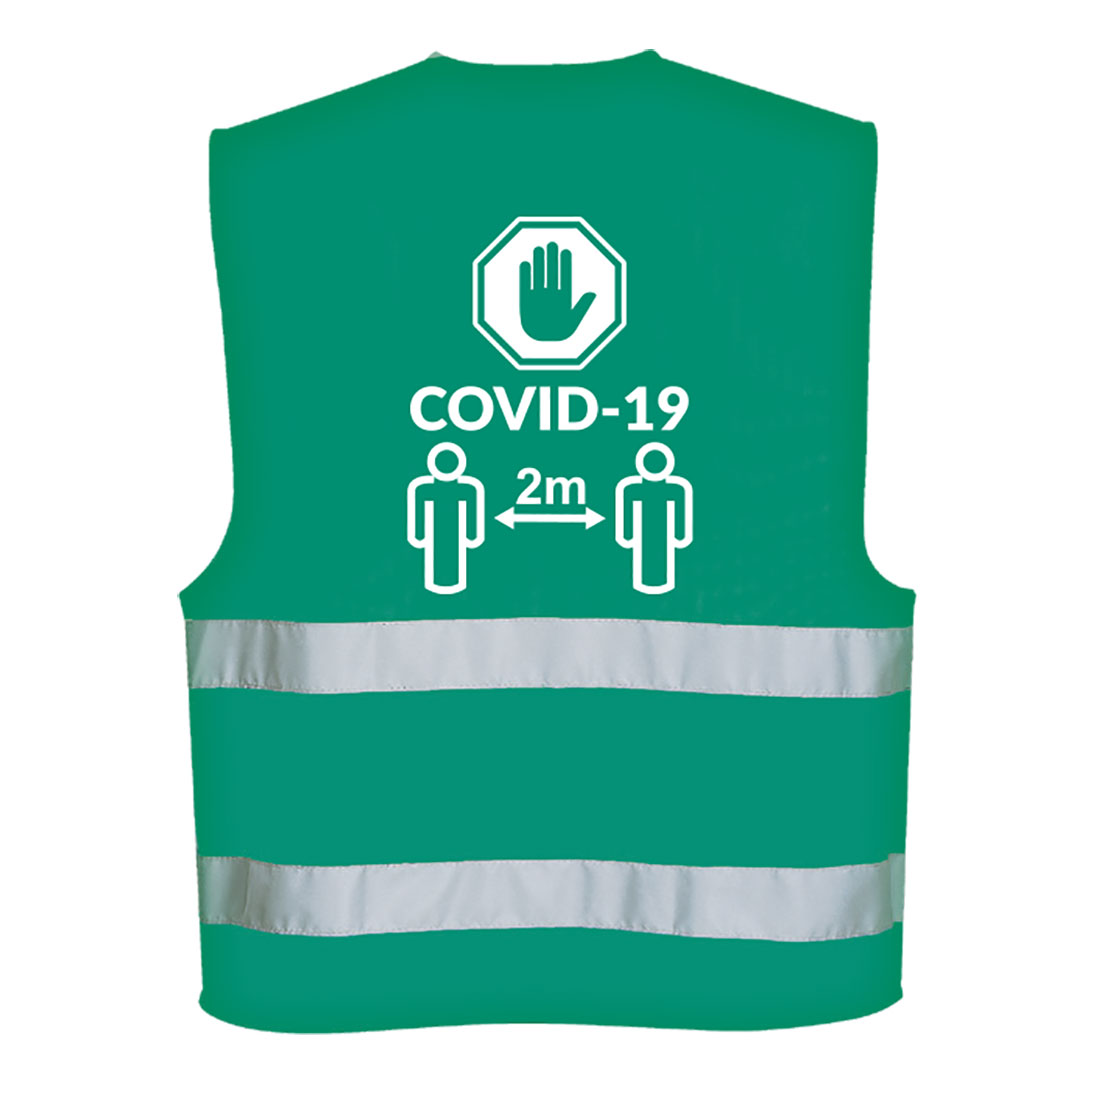 Compliance Officer Vest 2m - Bottle Green